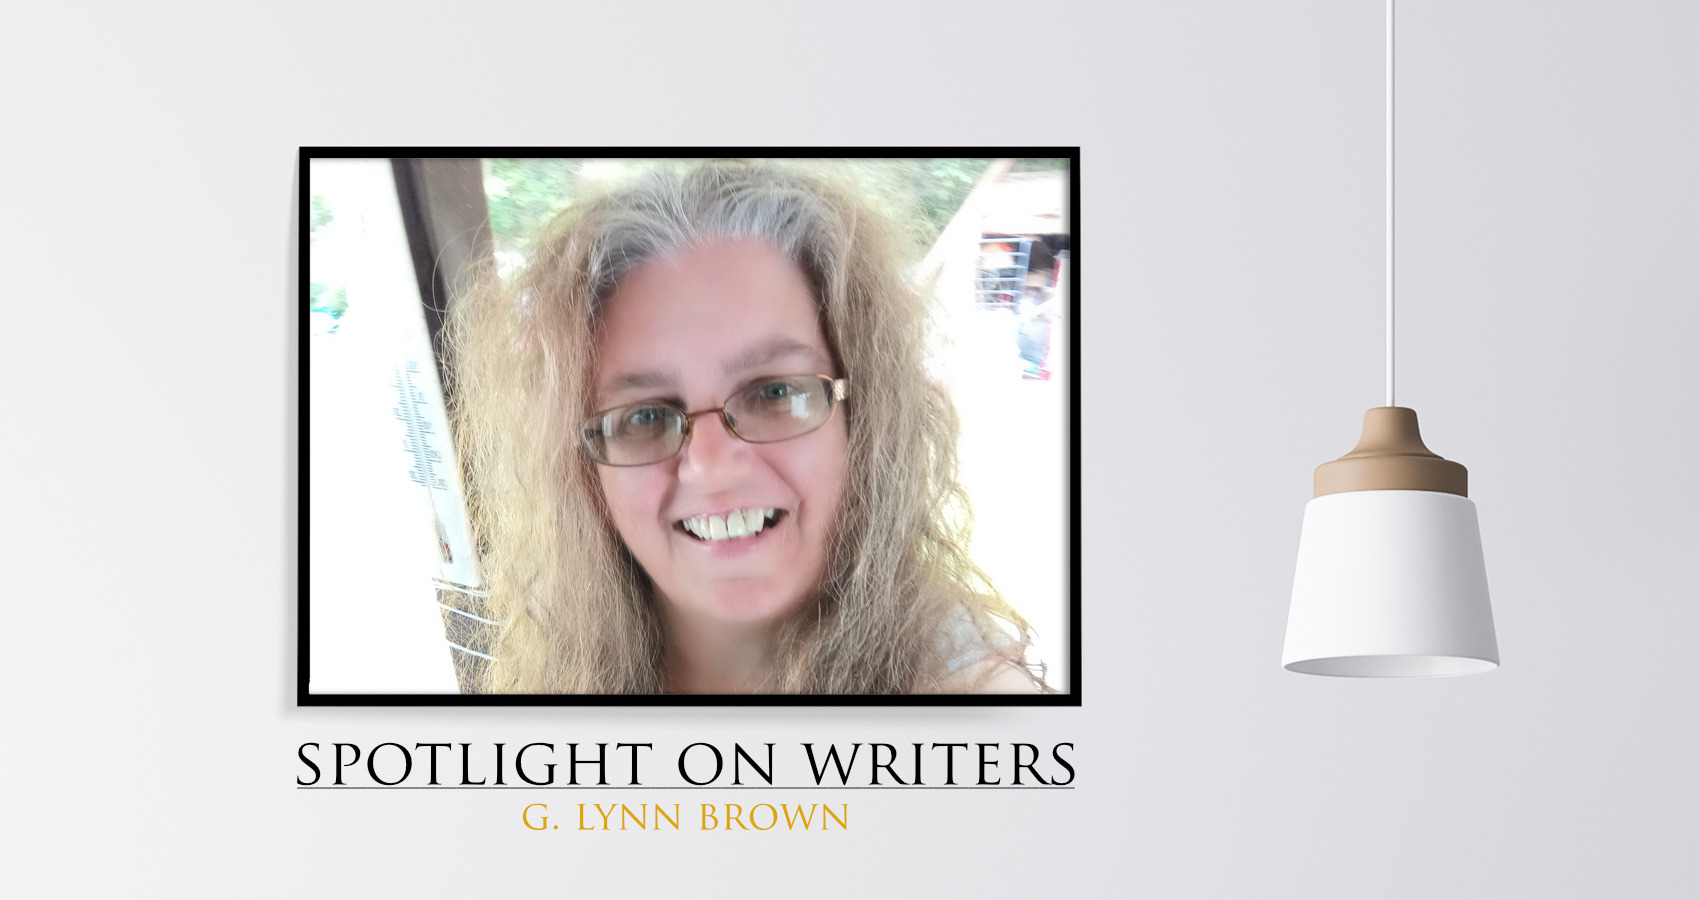 Spotlight On Writers - G. Lynn Brown, interview at Spillwords.com